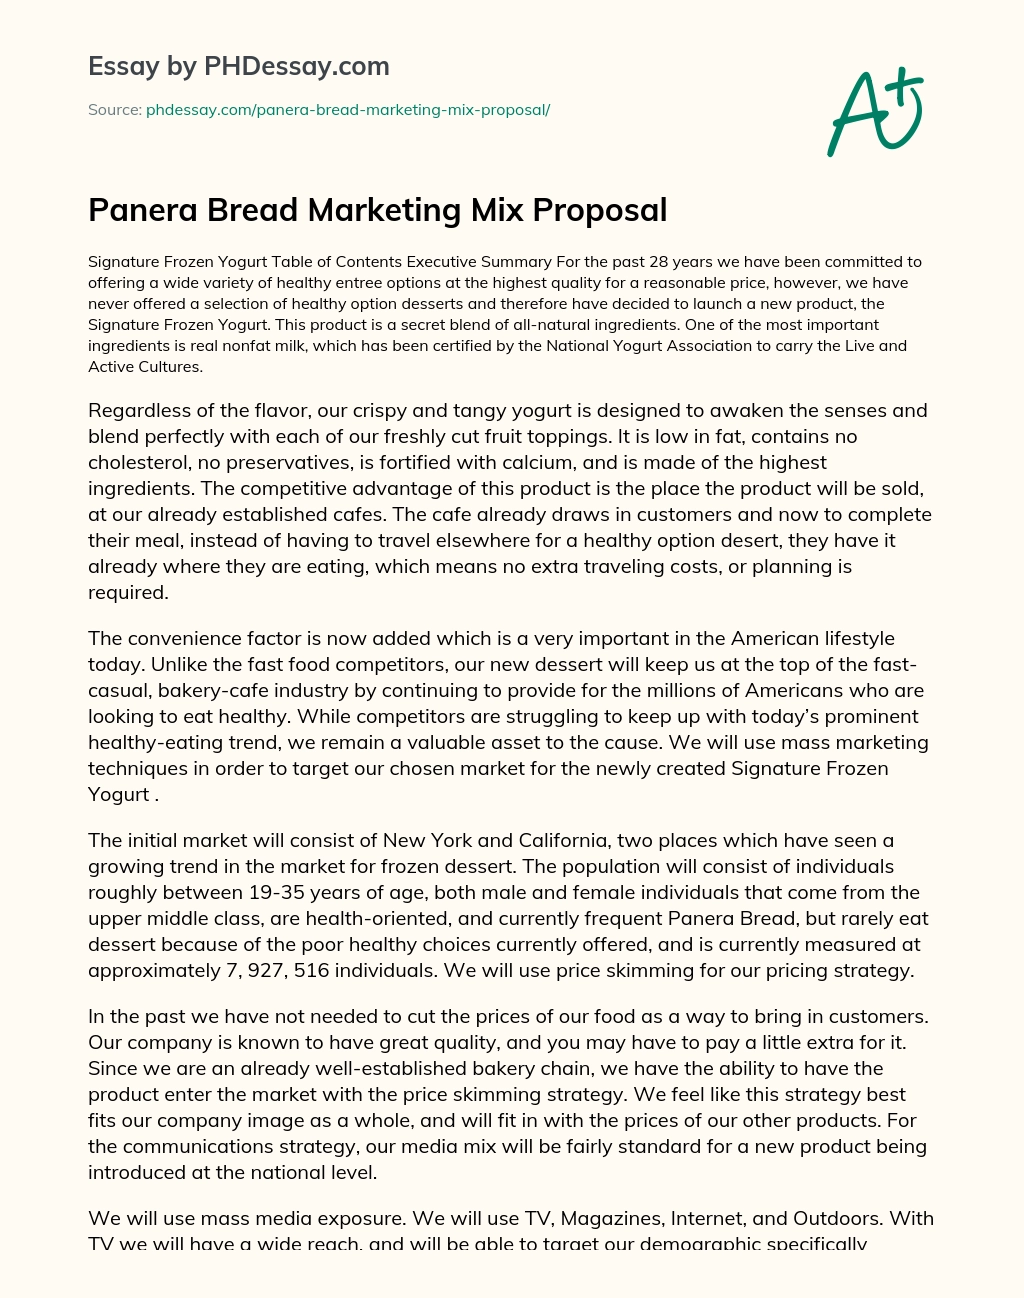 Panera Bread Marketing Mix Proposal essay